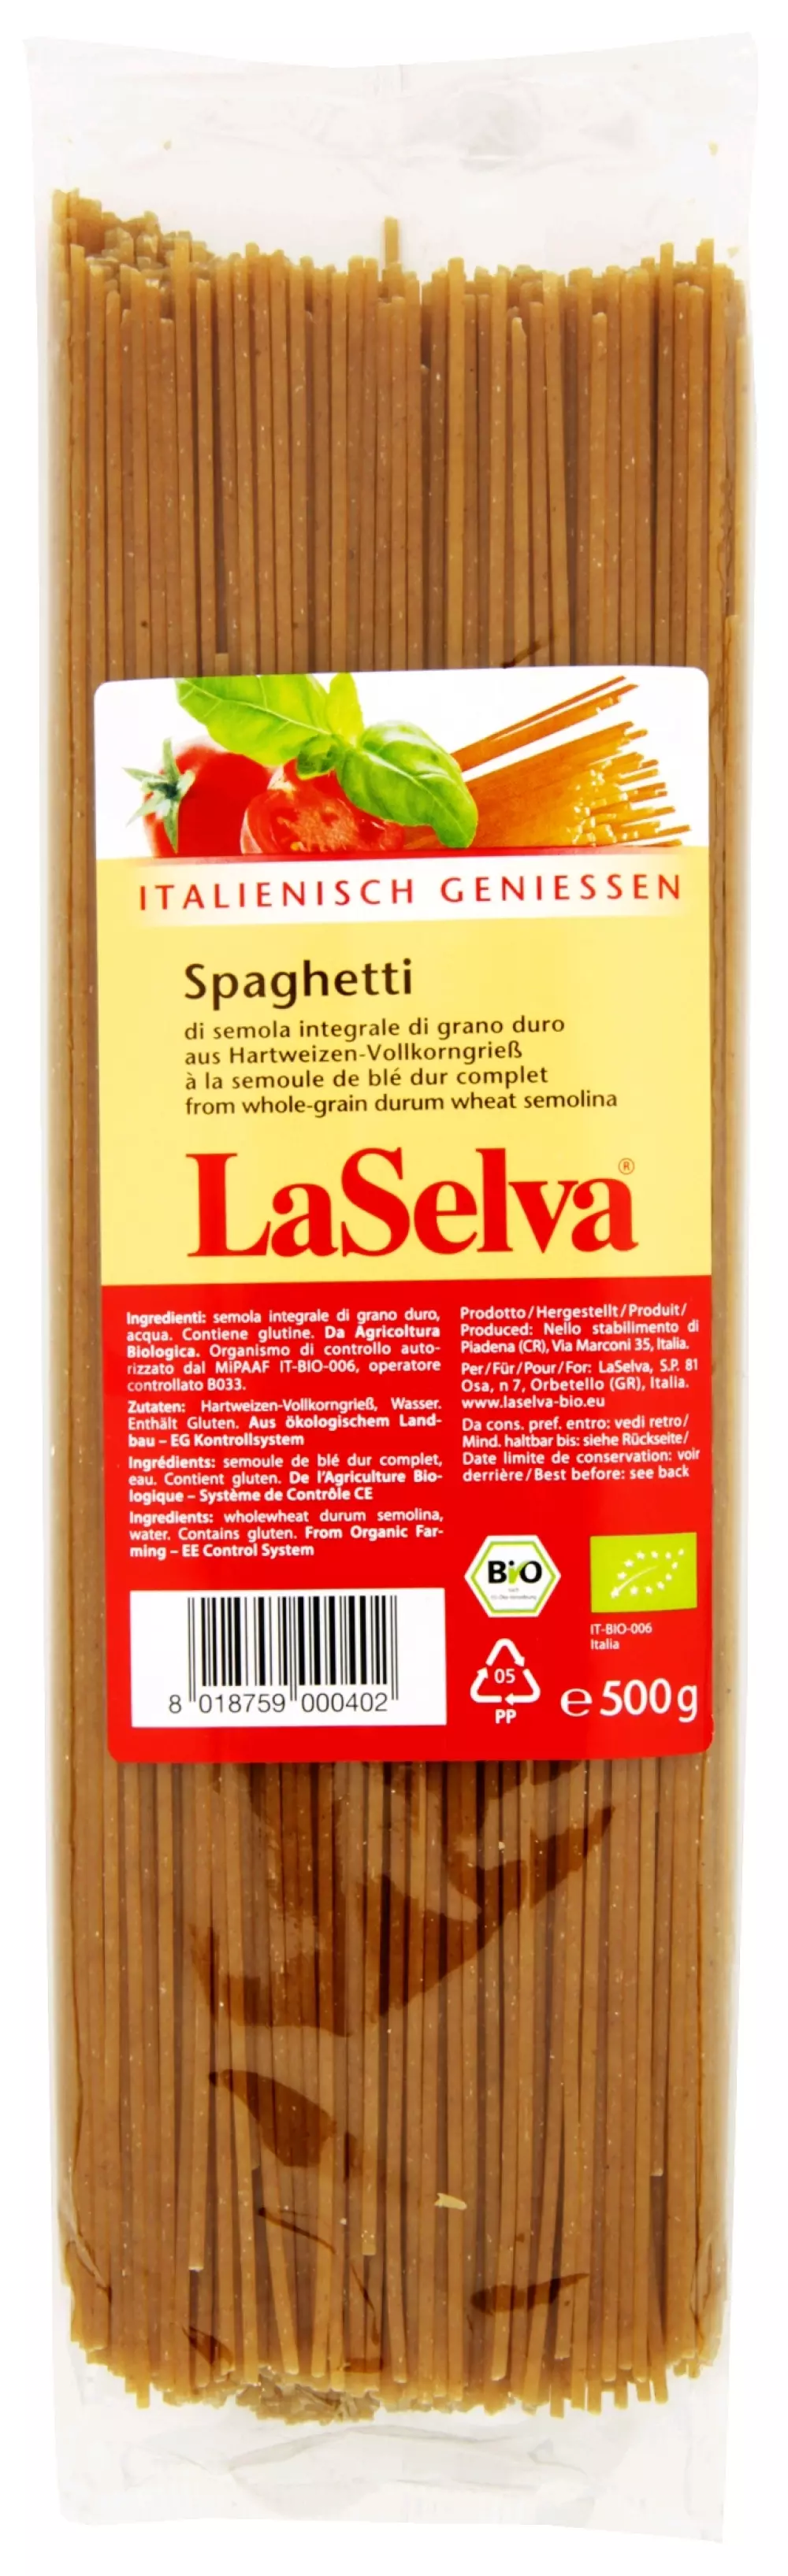 Fullkorn Spaghetti 500g. Øko - La Selva Pasta Integrali Spaghetti 500g 0407 SEL 8018759000402 Lang La Selva Bio